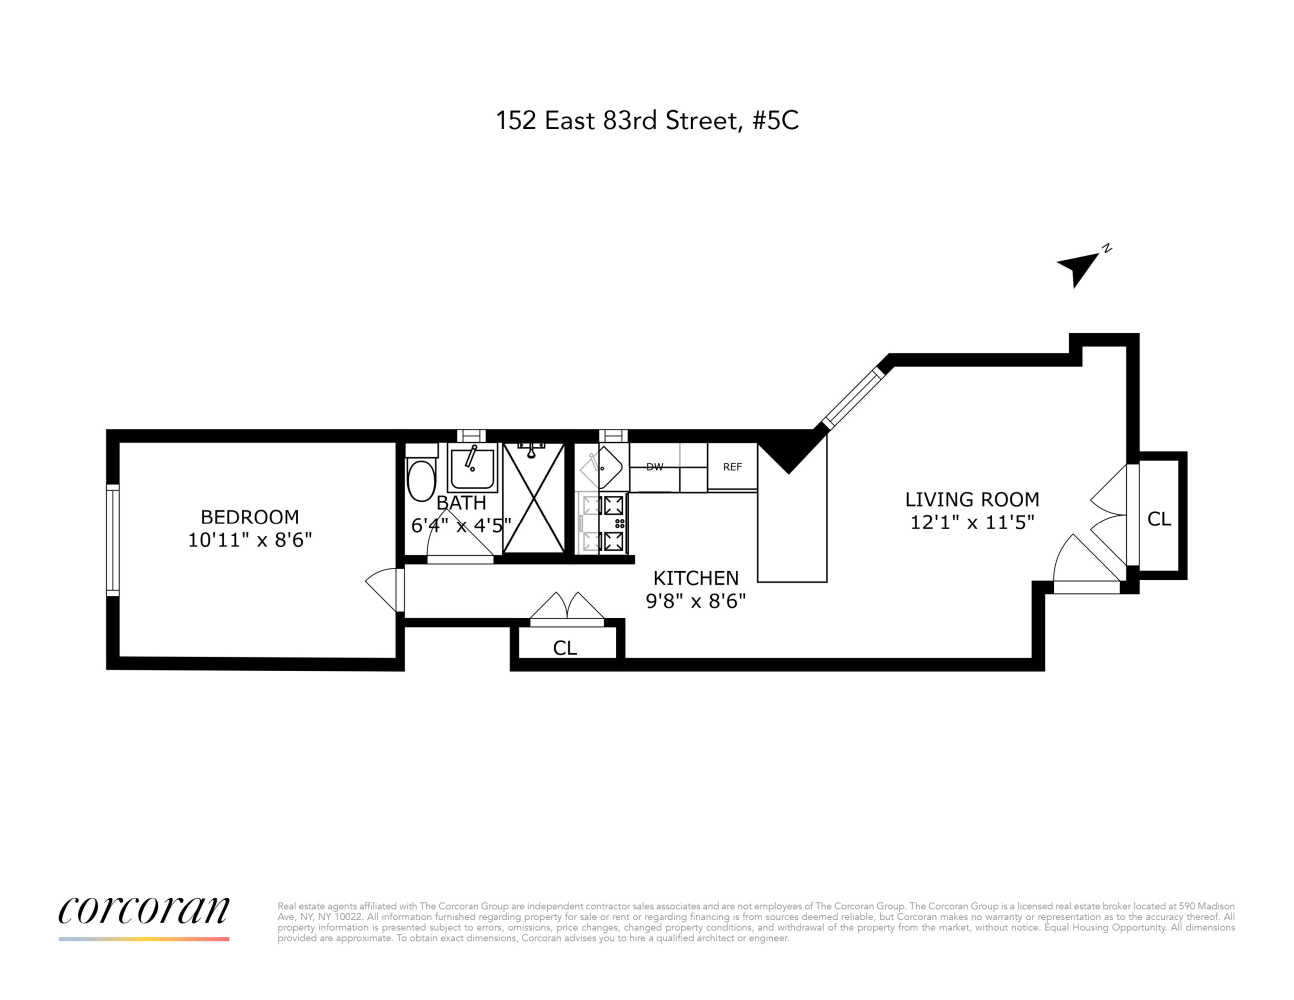 Floorplan for 152 East 83rd Street, 5C